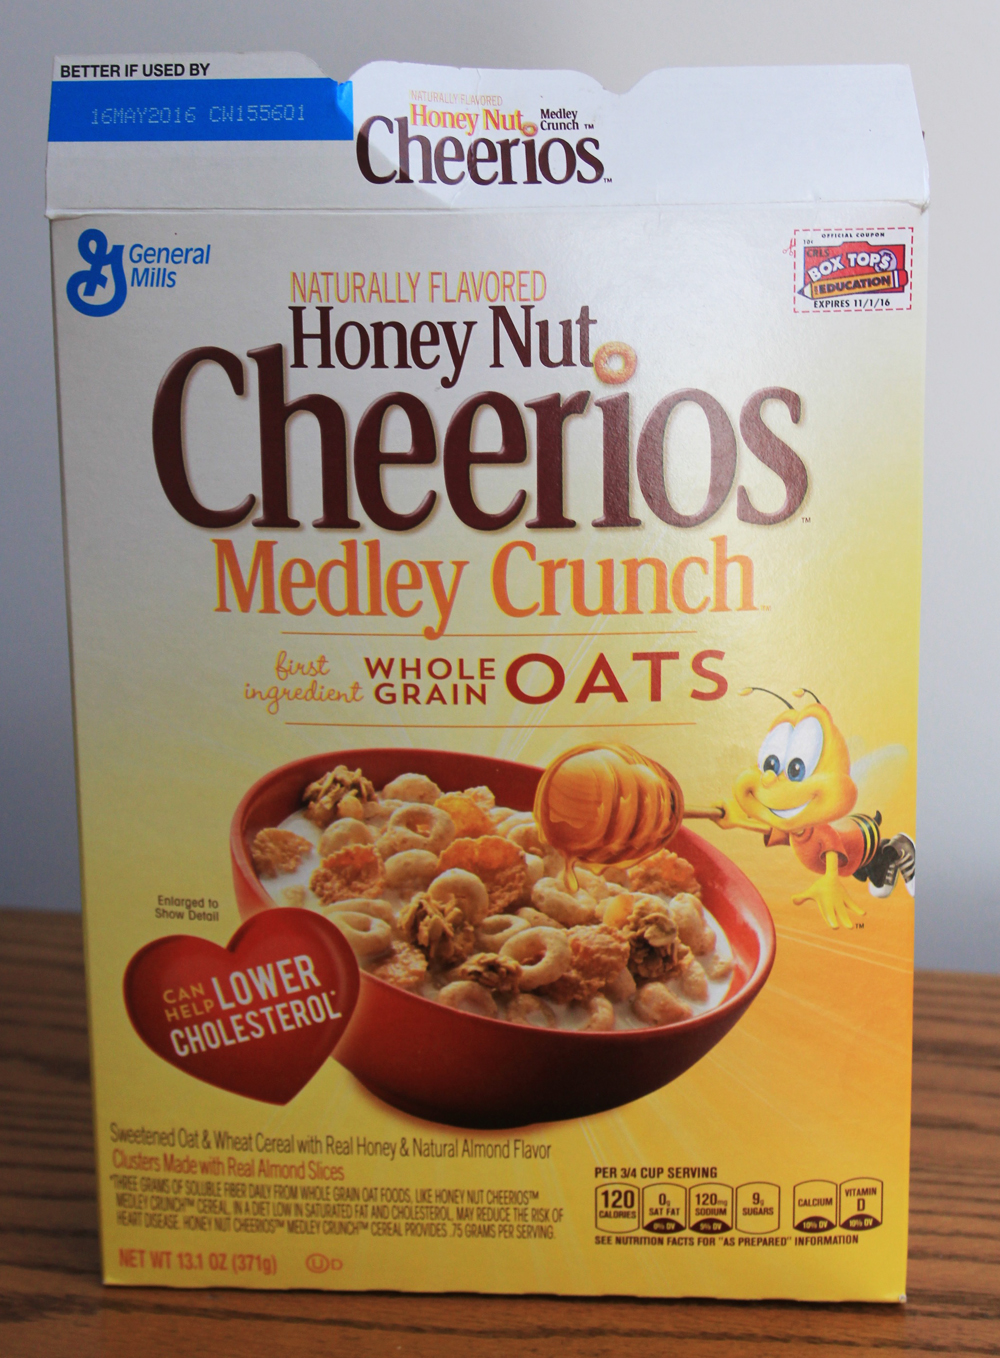 Cheerios Medley Crunch Cereal, Honey Nut, Cereal